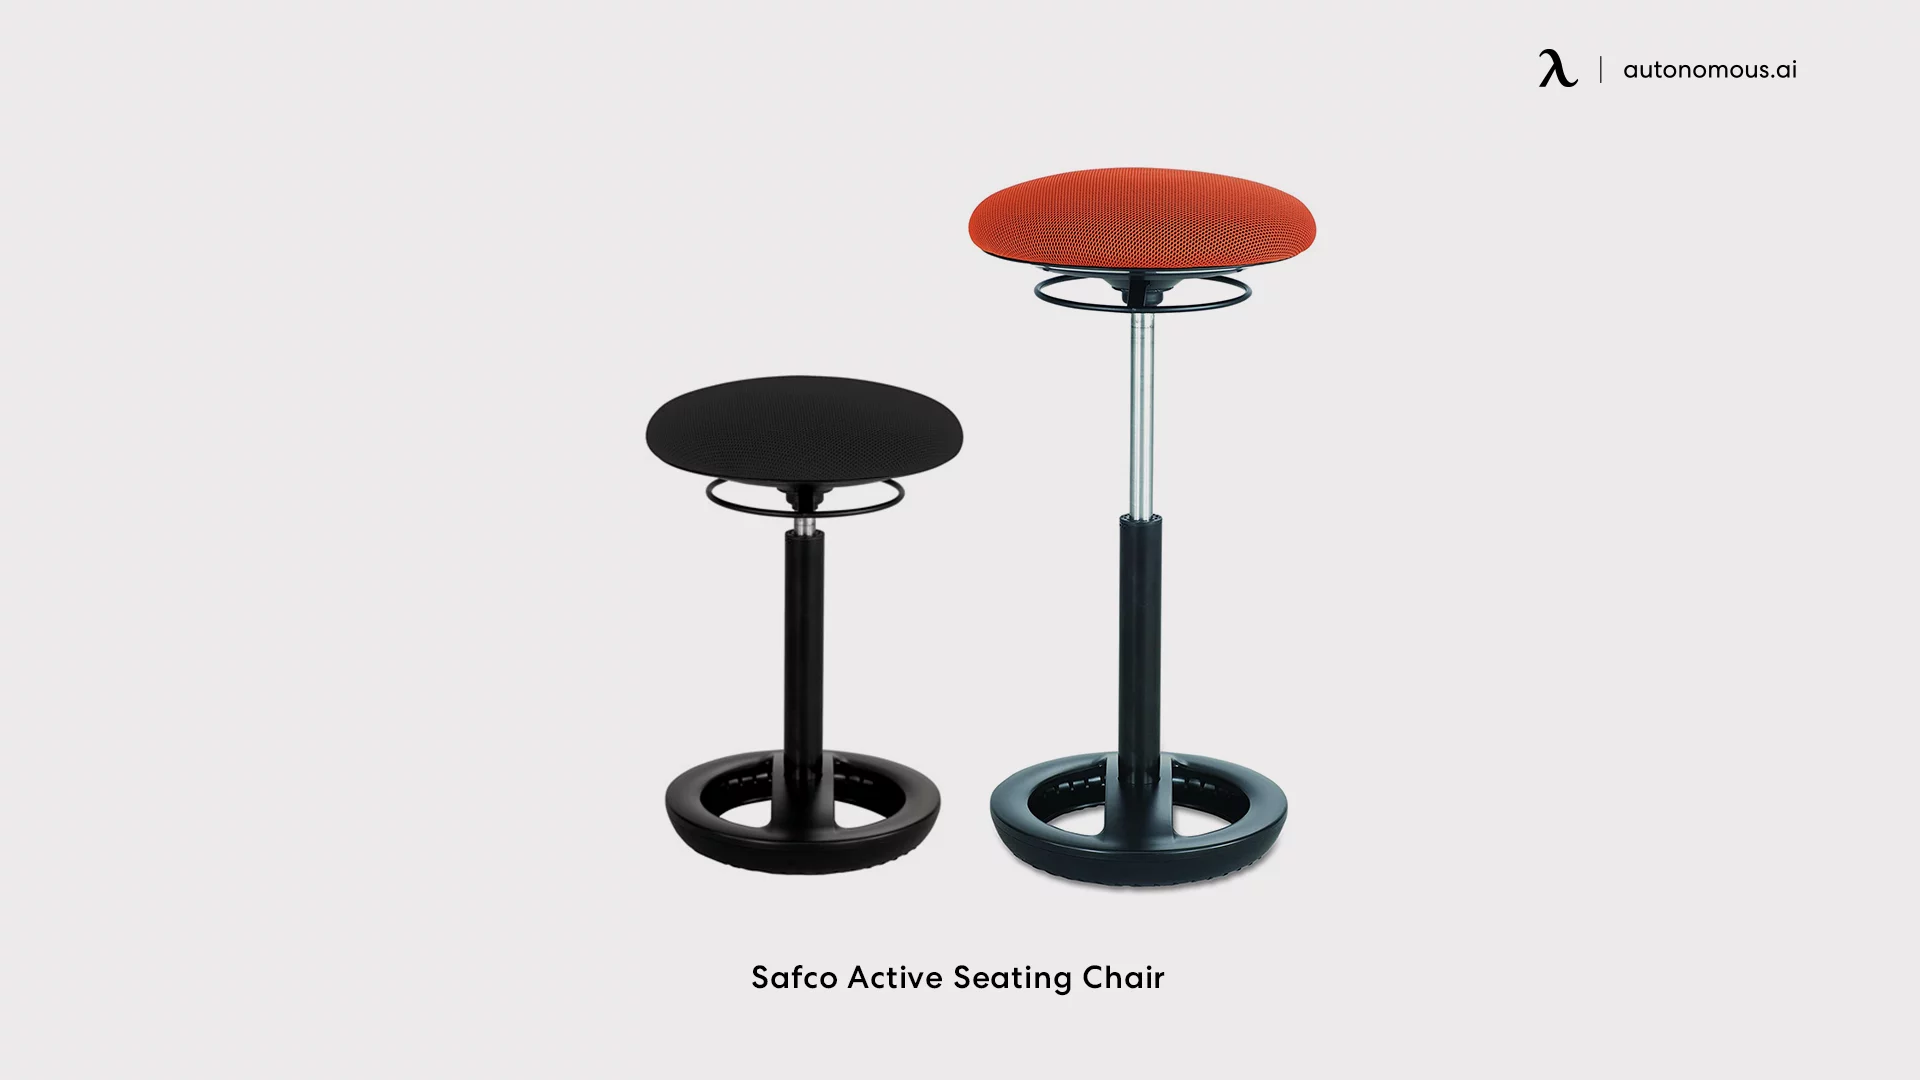 Safco Active Seating Chair ergonomic desk stool